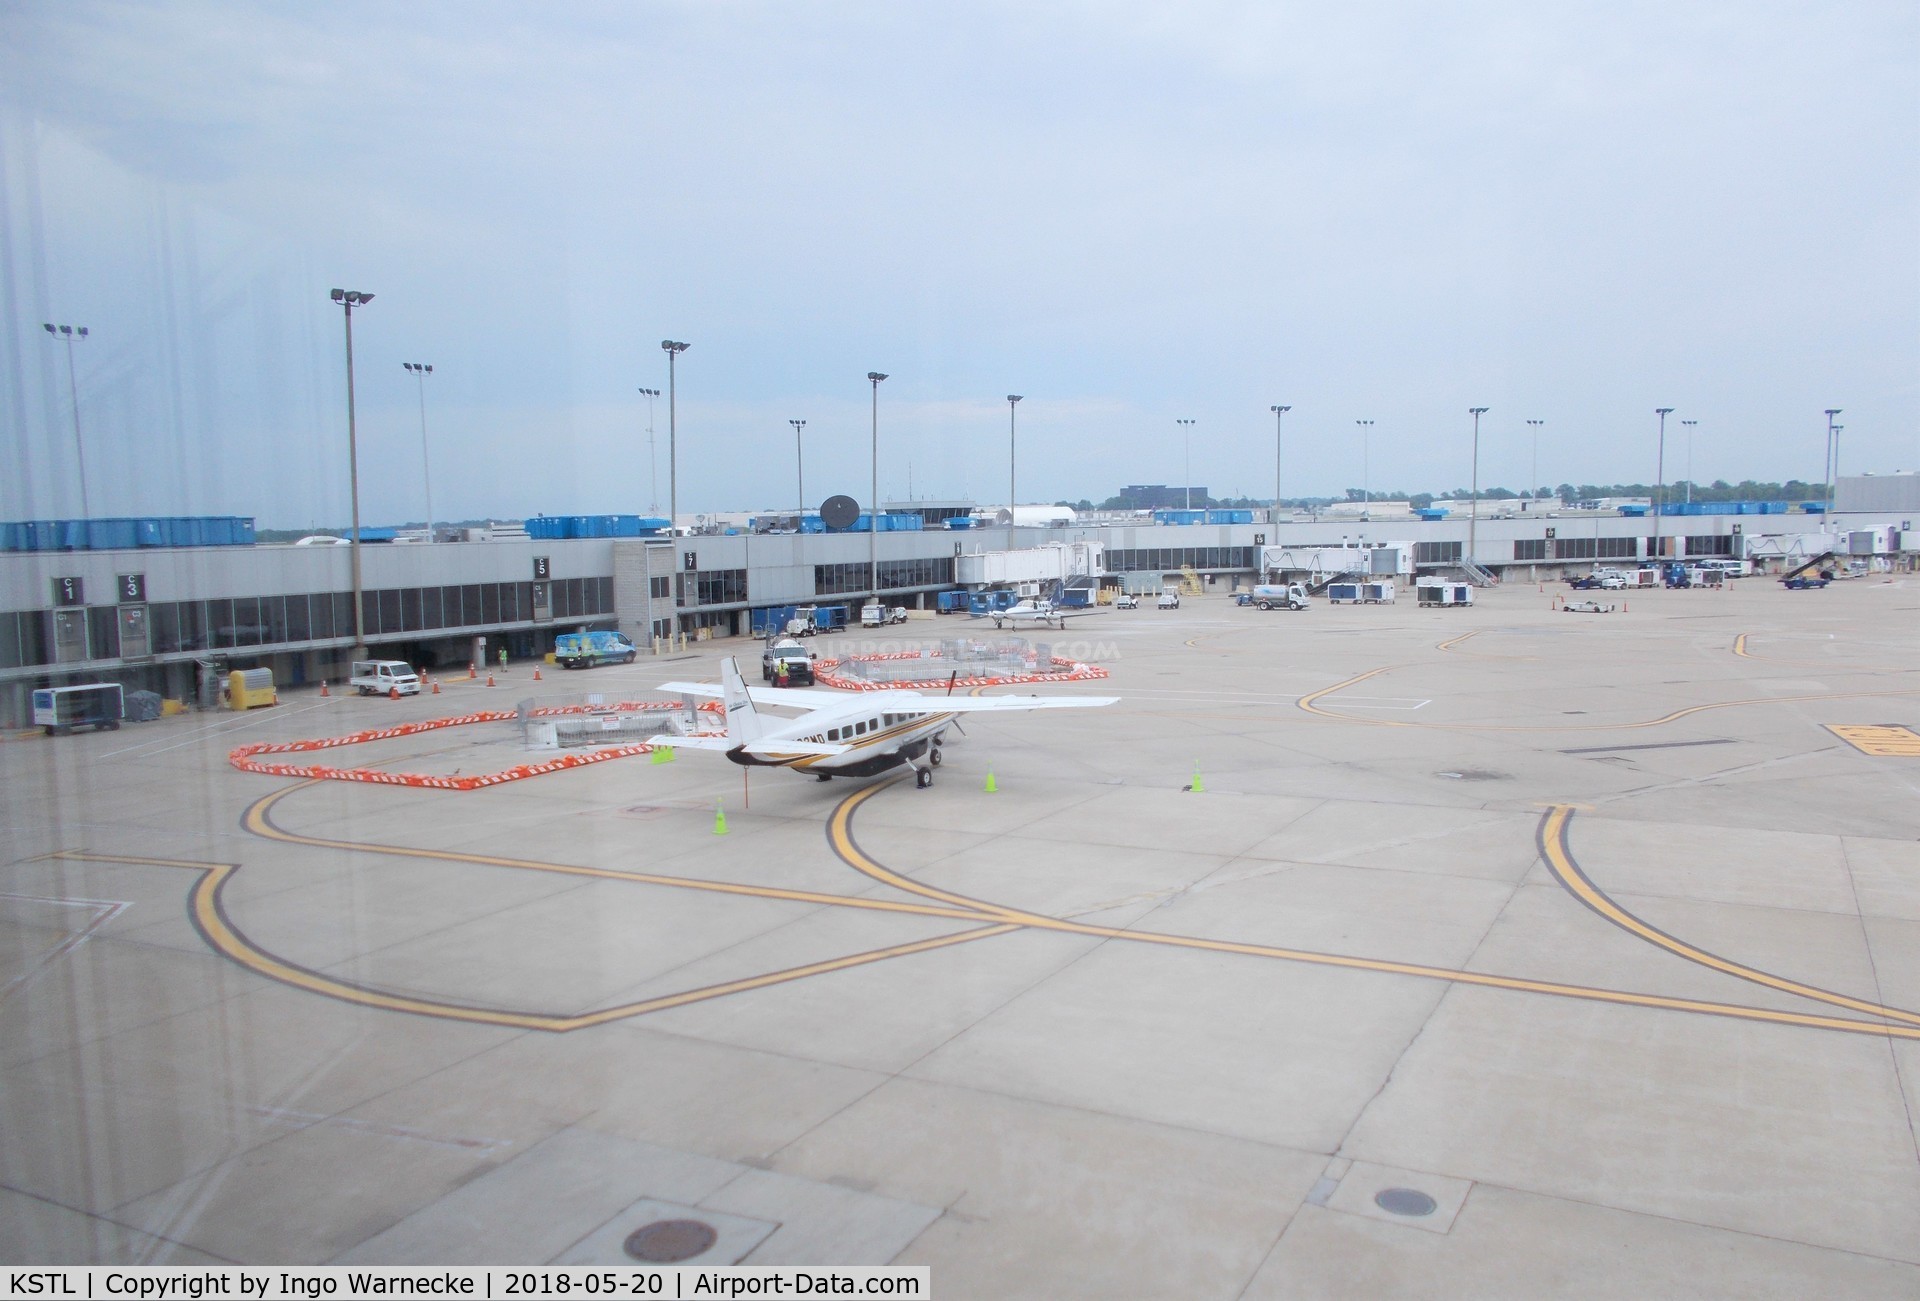 Lambert-st Louis International Airport (STL) - Lambert-St. Louis Intl. Airport, St. Louis MO